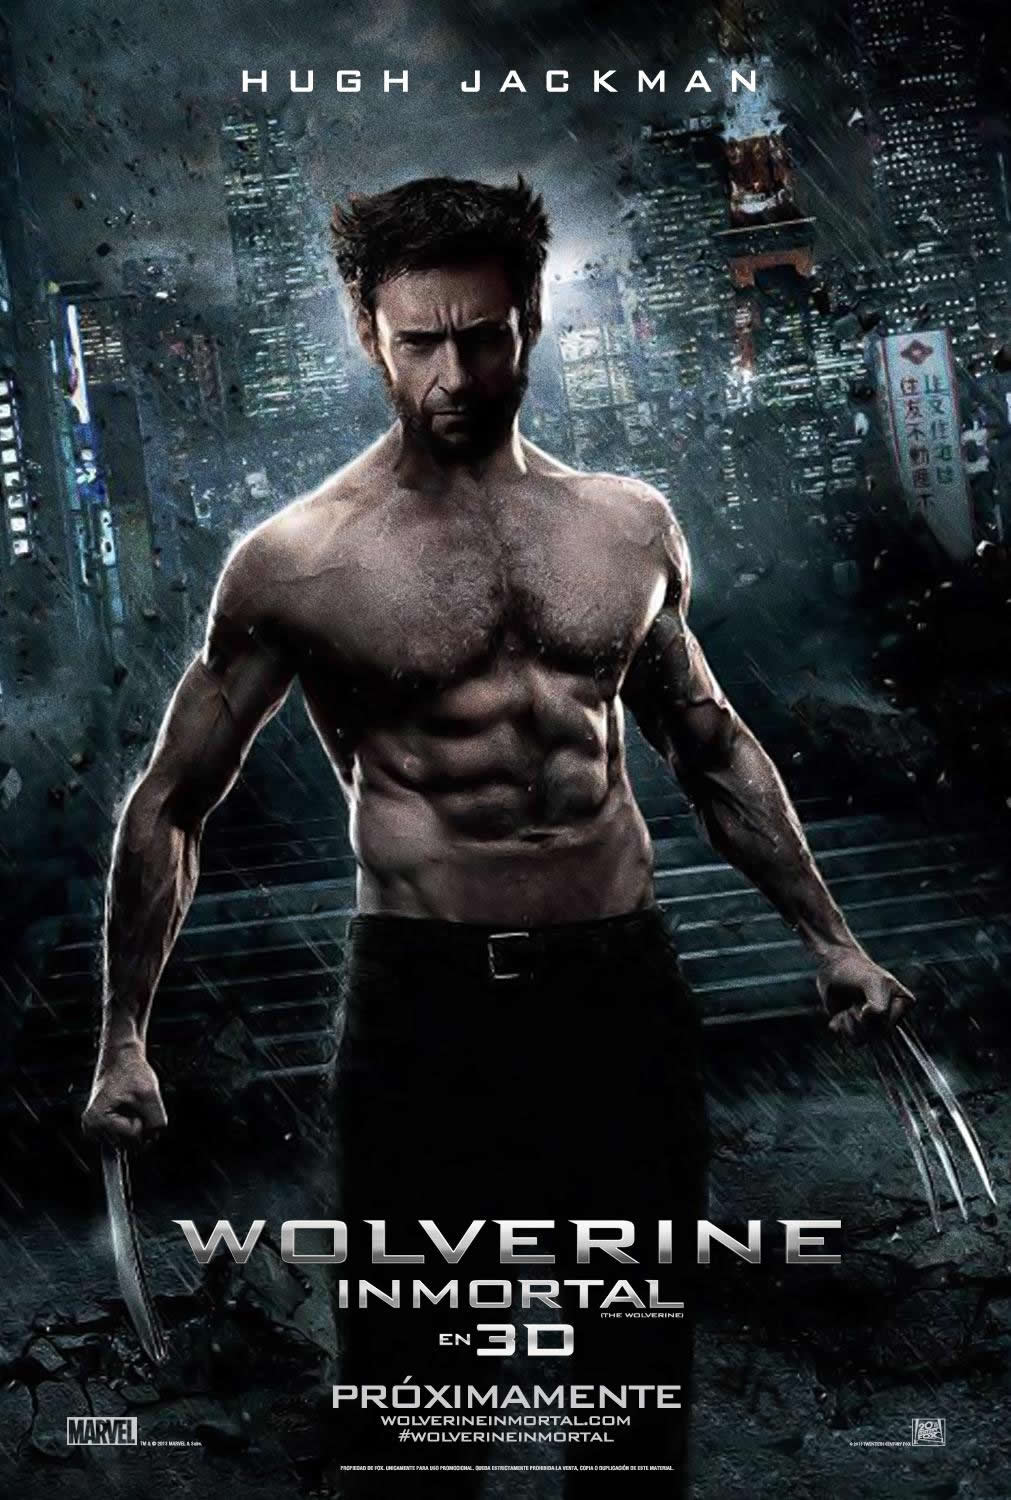 Wolverine Imortal poster 1Jun2013